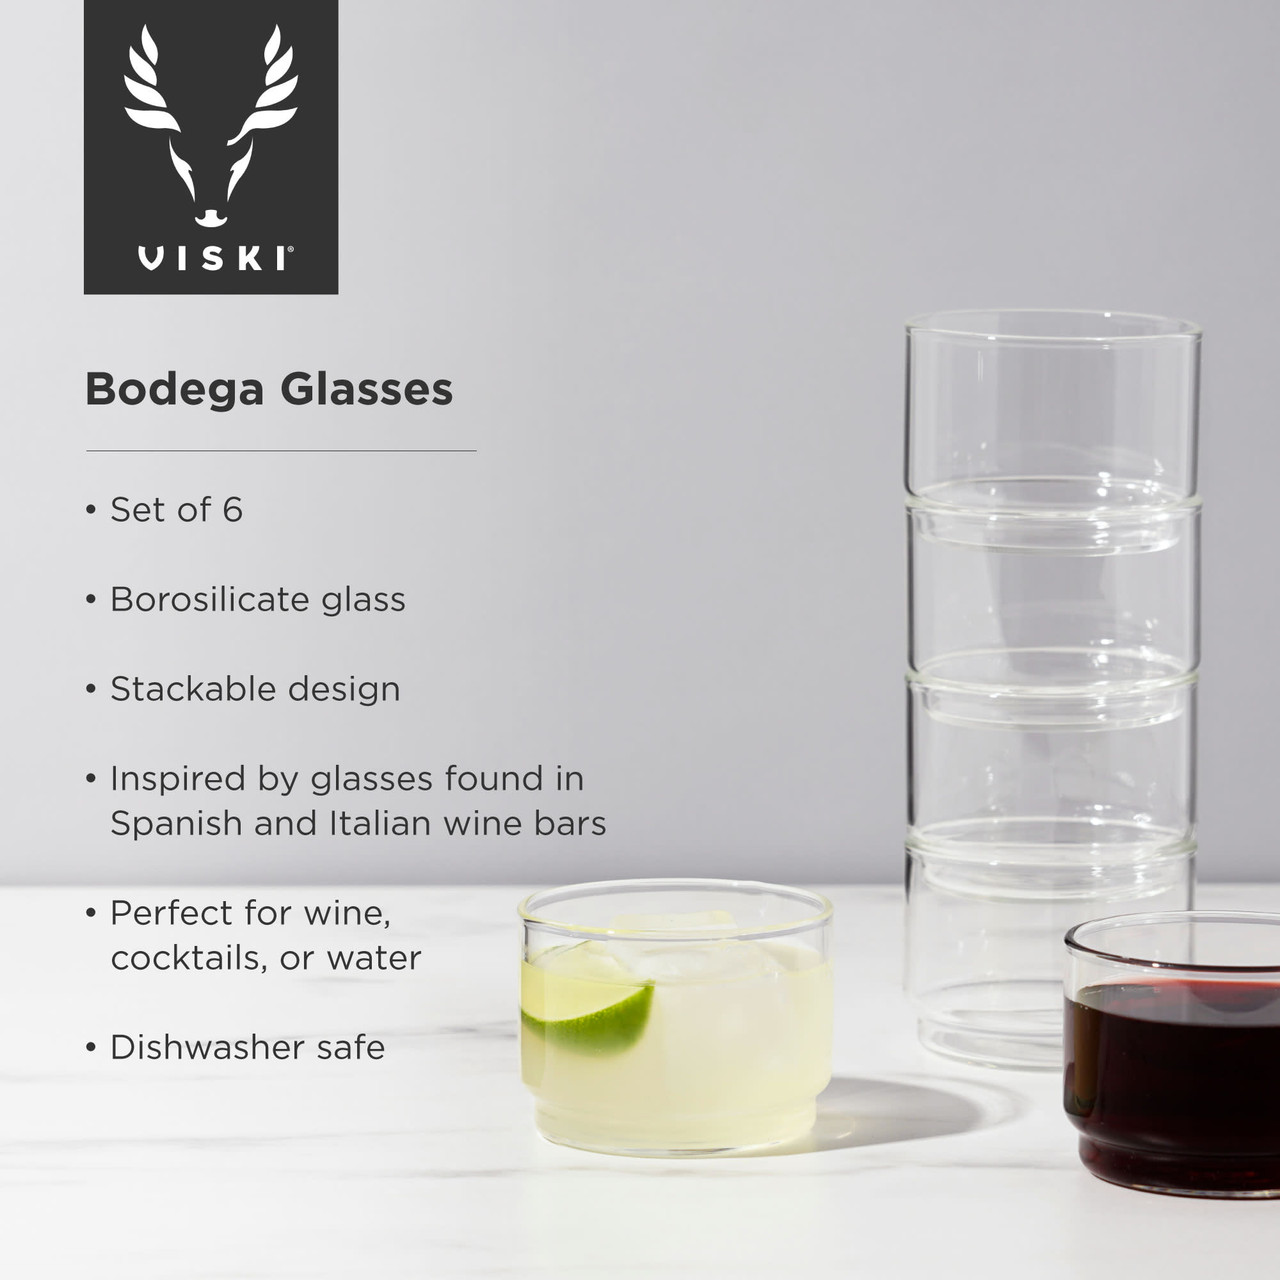 Bodega Glasses by Viski set of 6